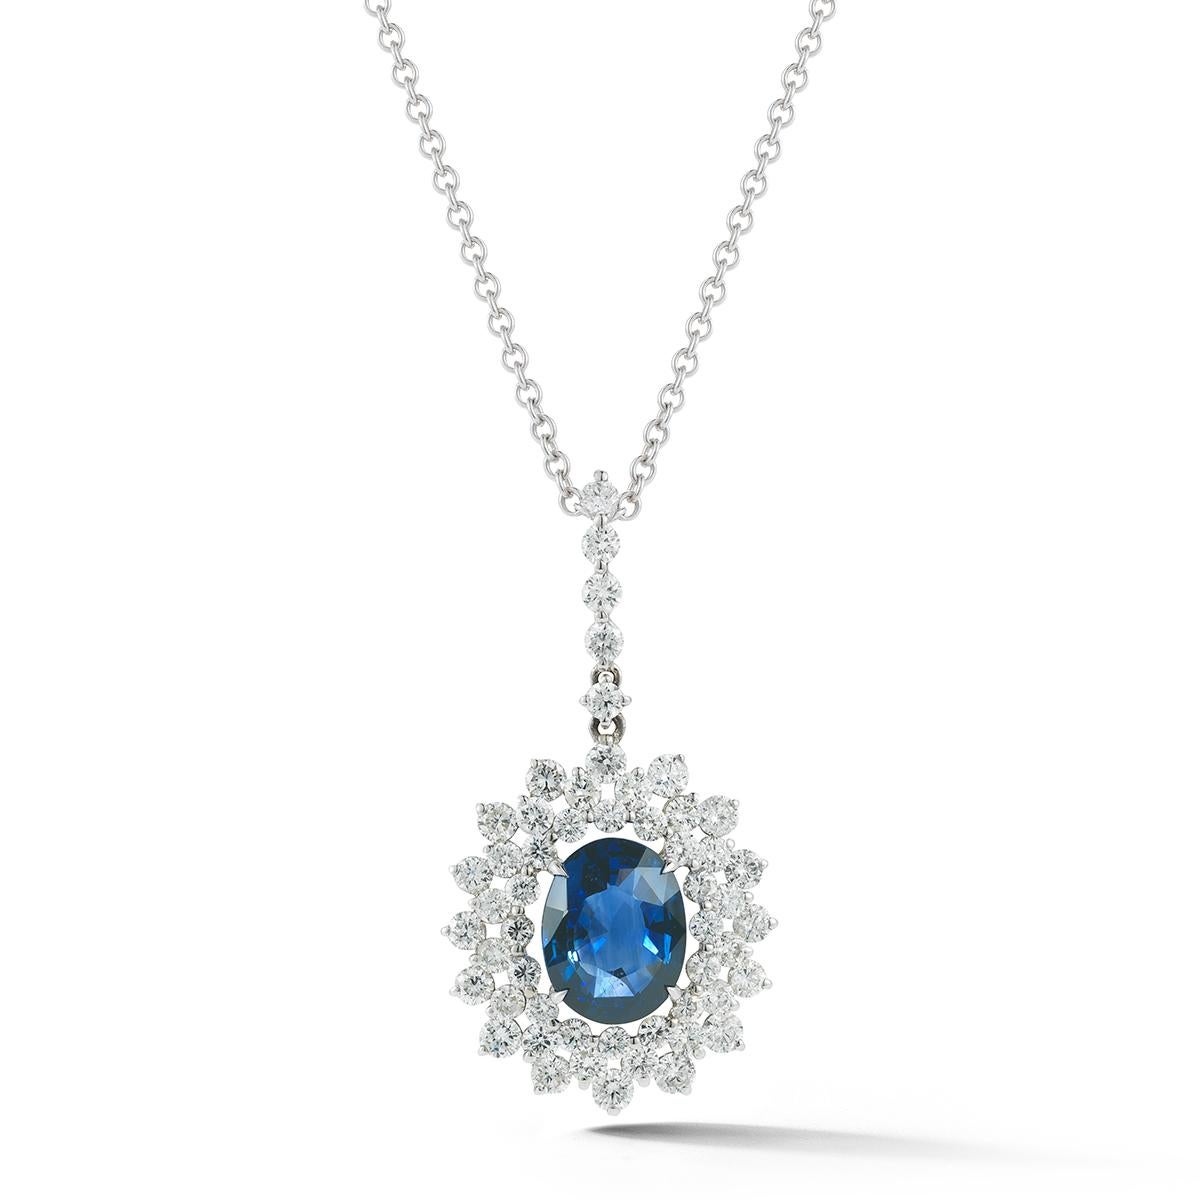 Oval Cut Sapphire and Diamond Pendant